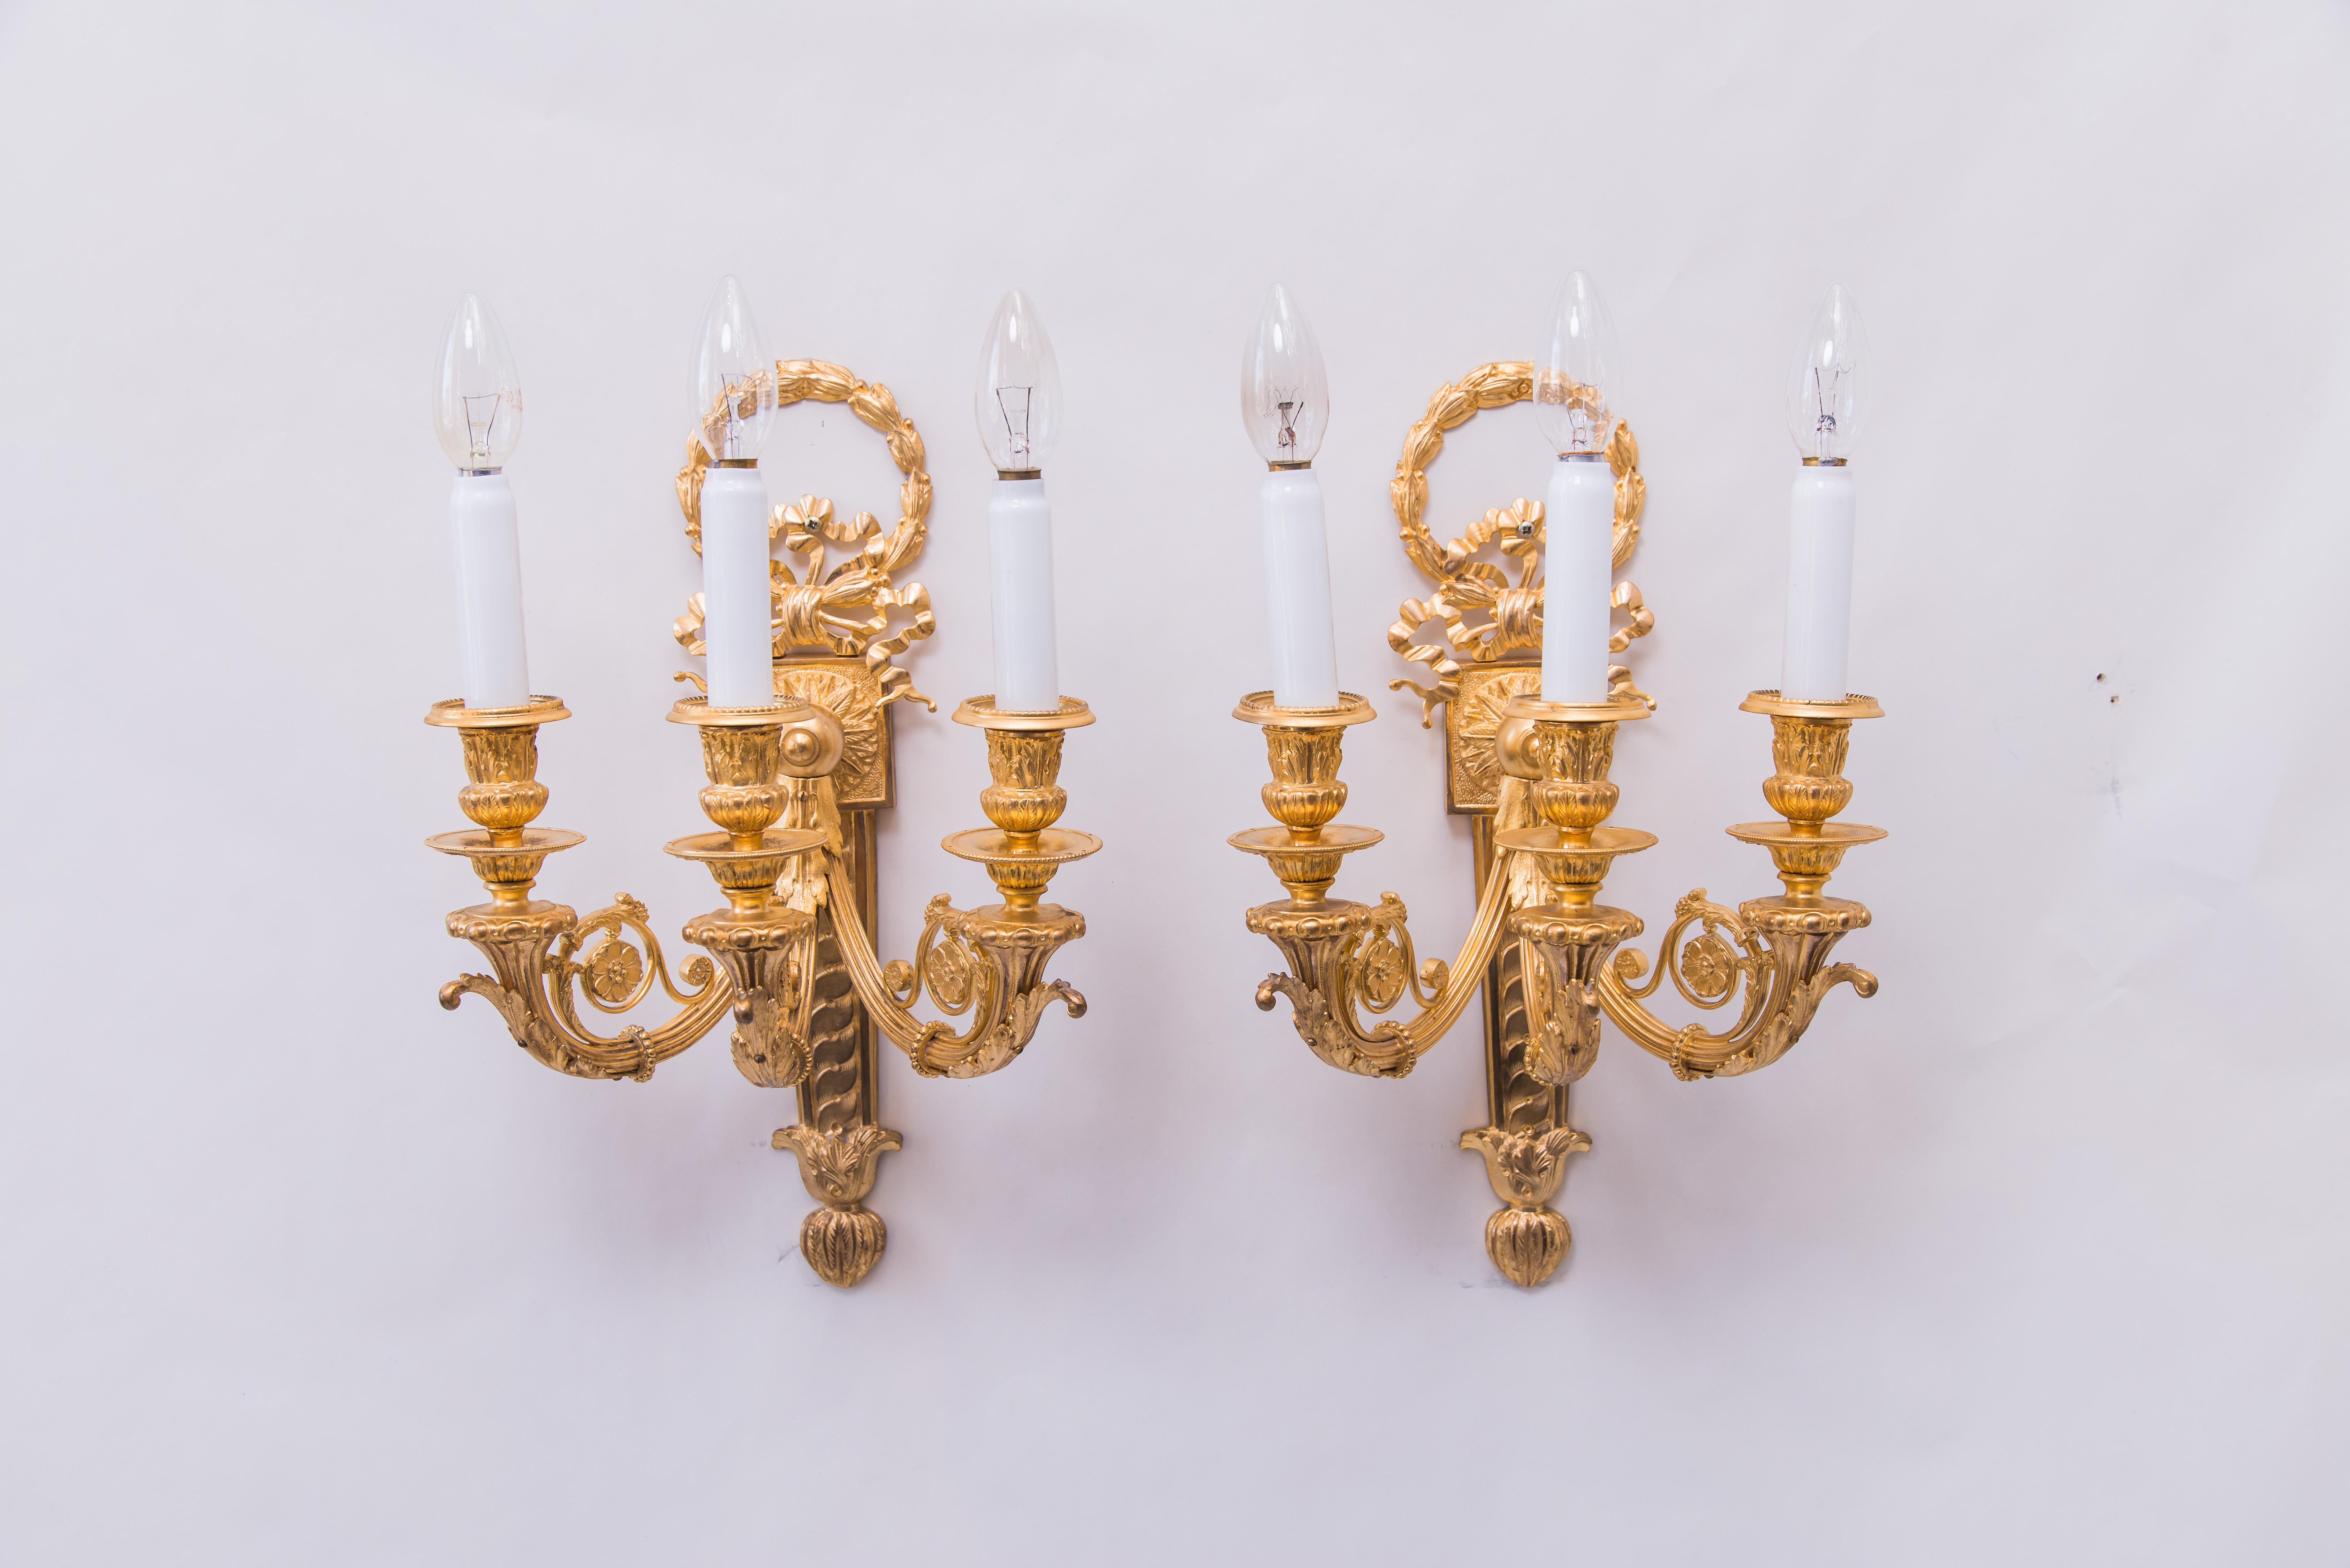 Deux grandes appliques historiées dorées, circa 1890s
Très bel état d'origine
Manchons en verre d'origine.
       